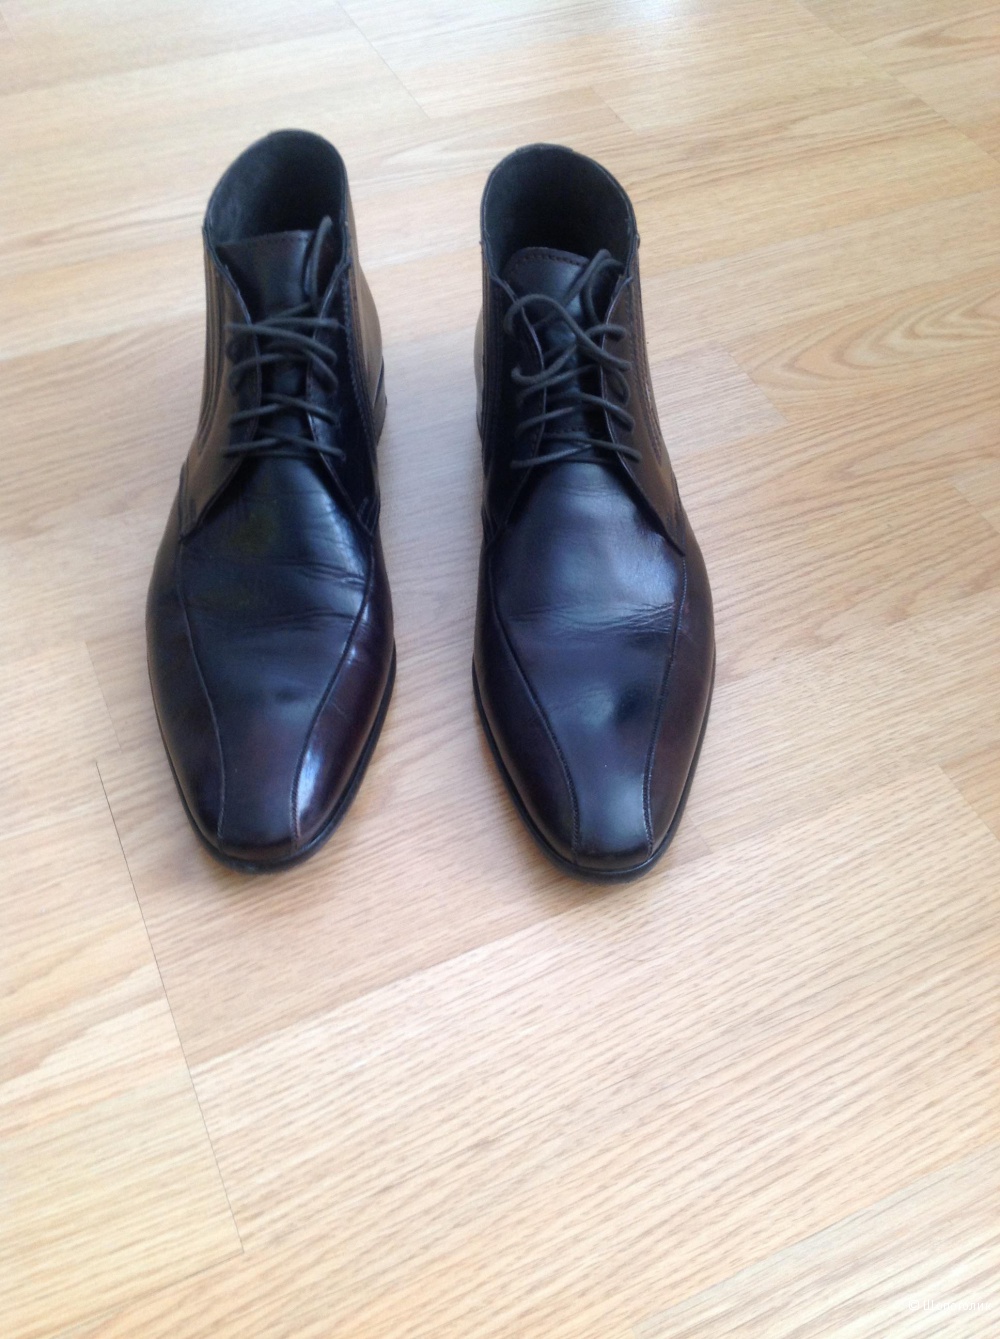 Пристрою мужские классические ботинки Thomson 41 размер